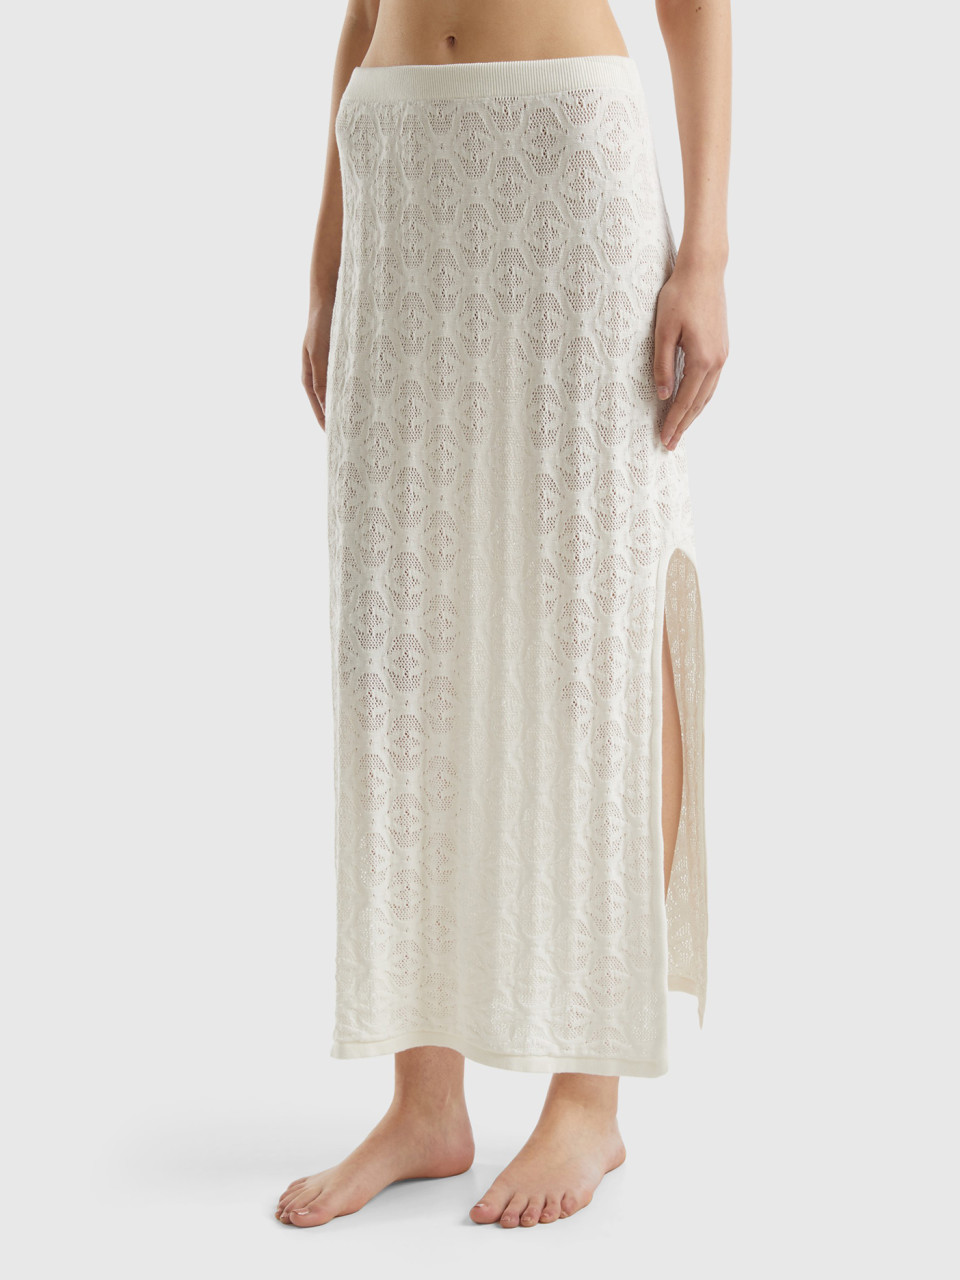 Benetton, Monogram Knit Midi Skirt, Creamy White, Women